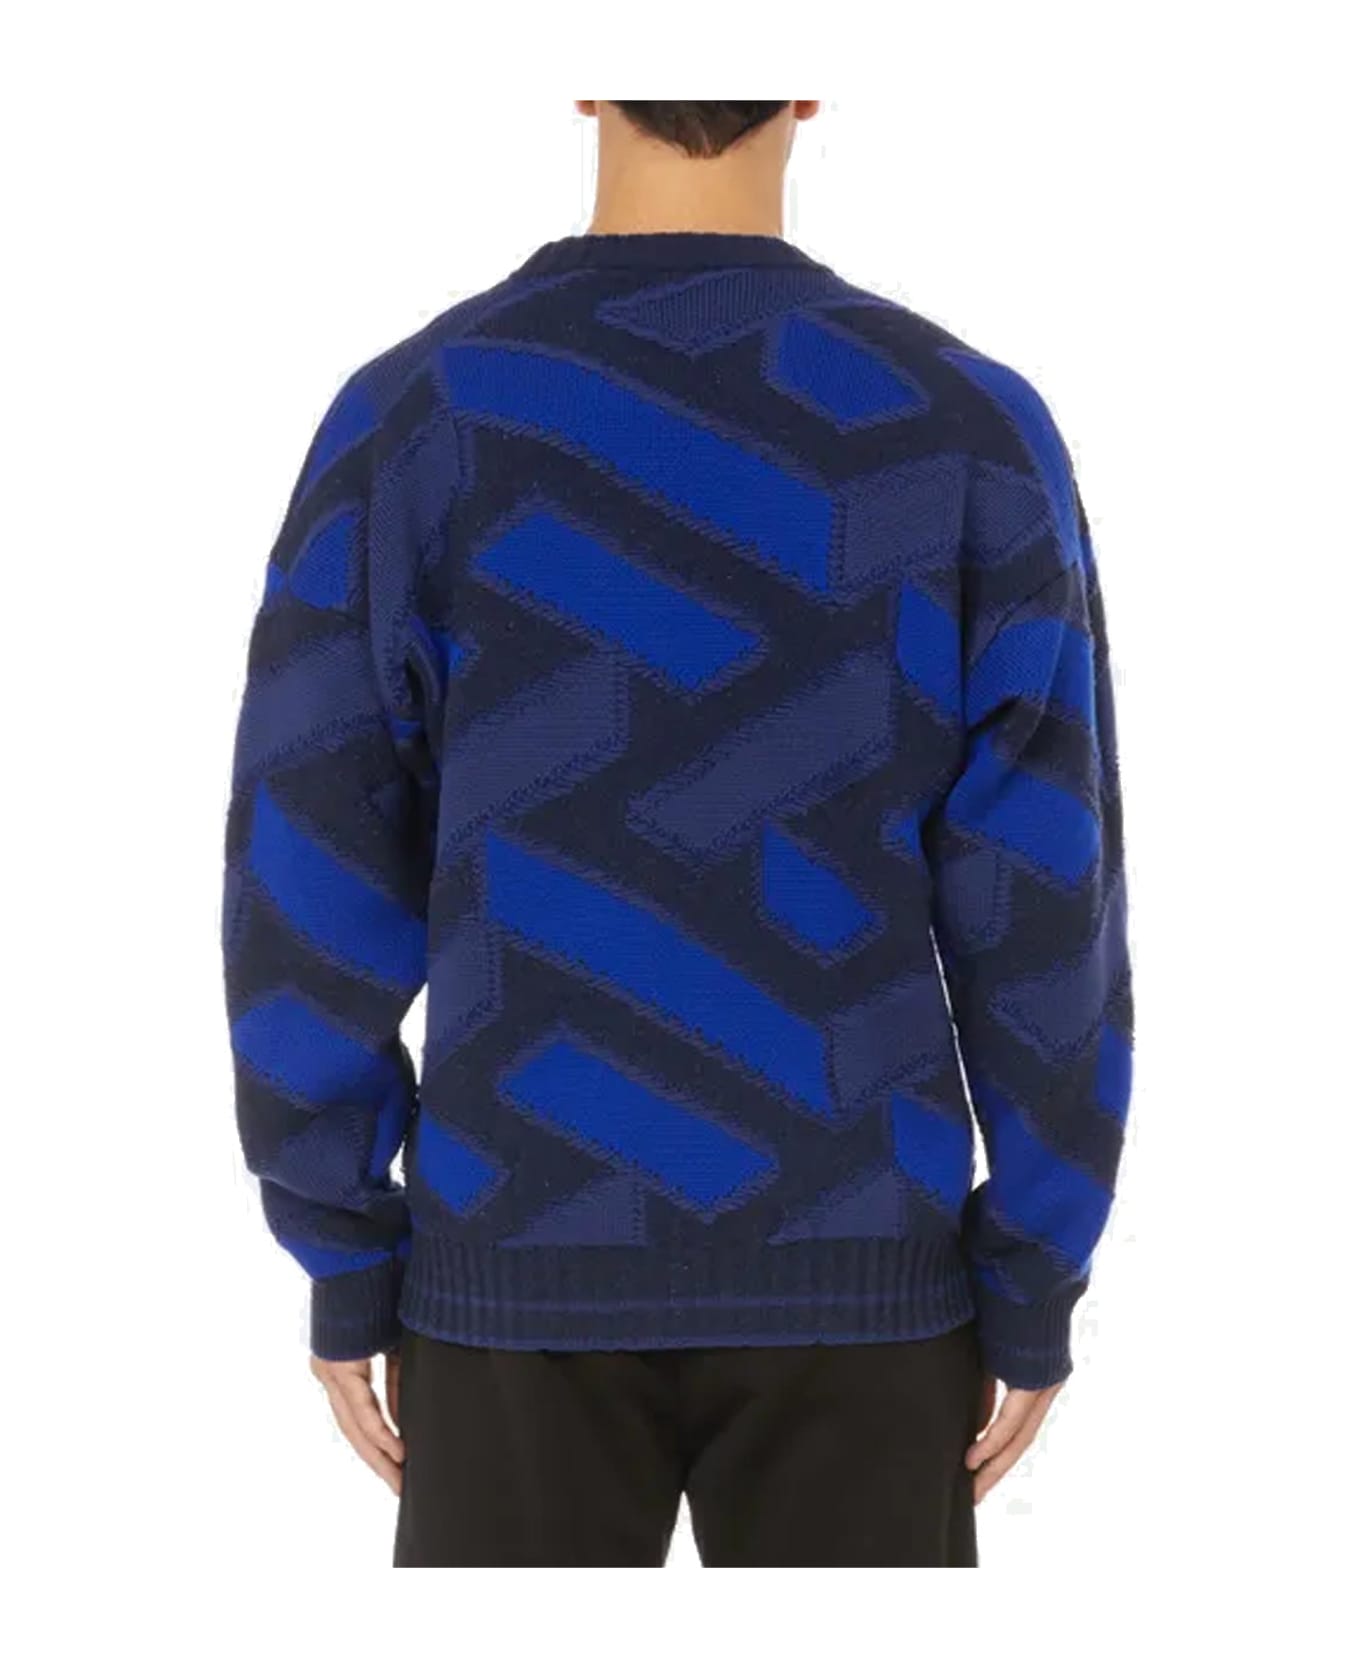 Versace Logo Sweater - Blue